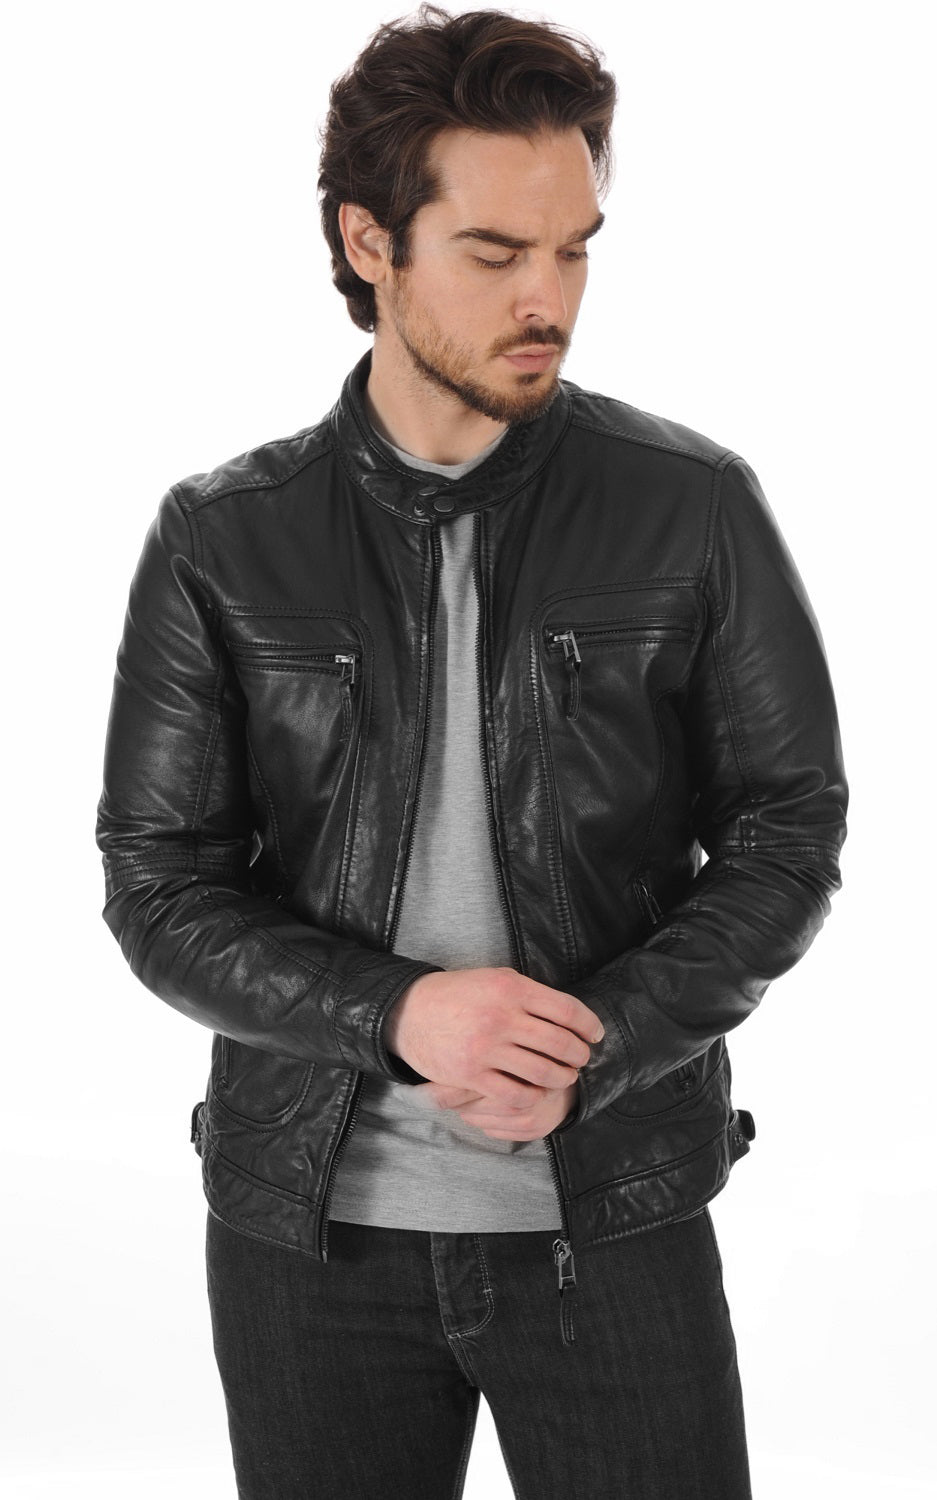 Skinoutfit Men's Genuine Leather Jacket